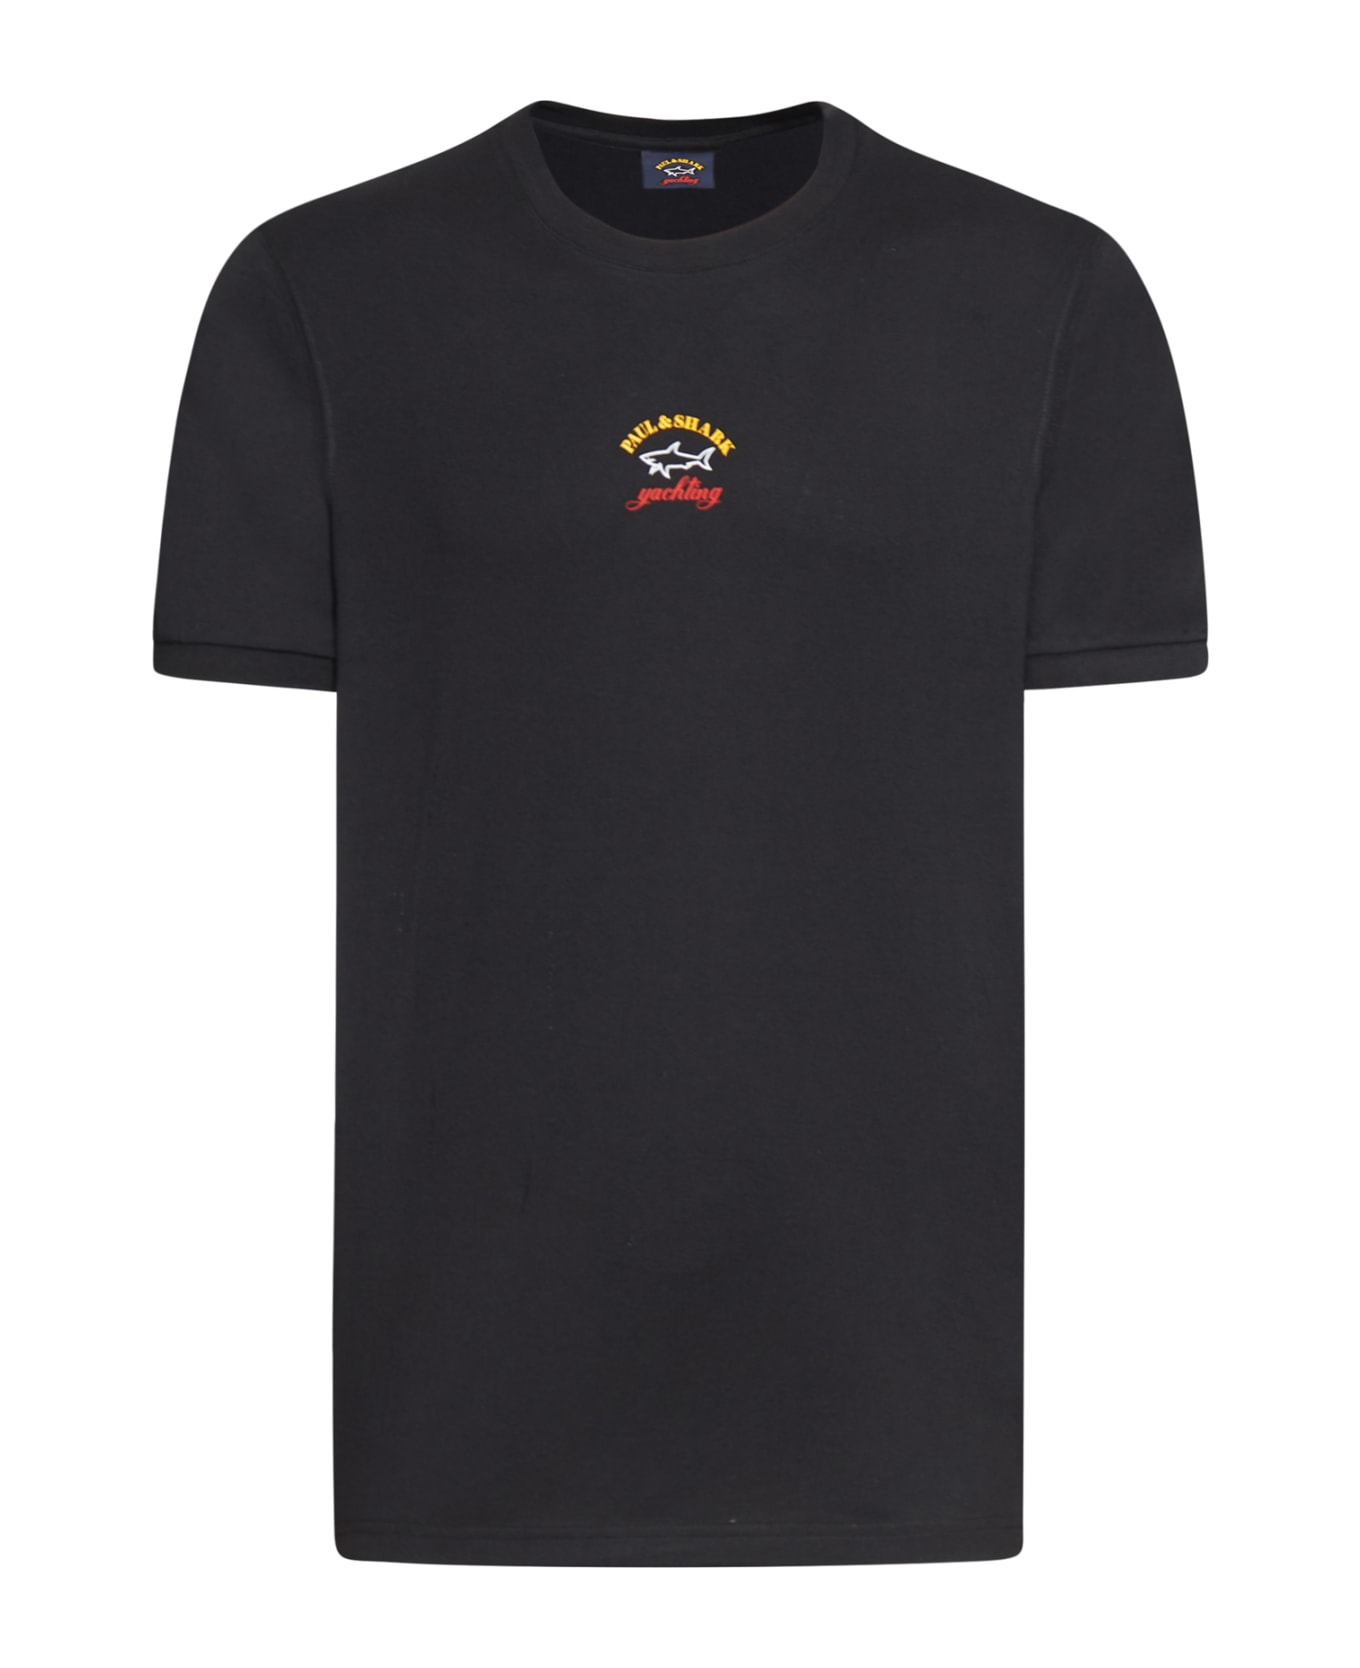 Paul&Shark T-shirt Cotton - Black